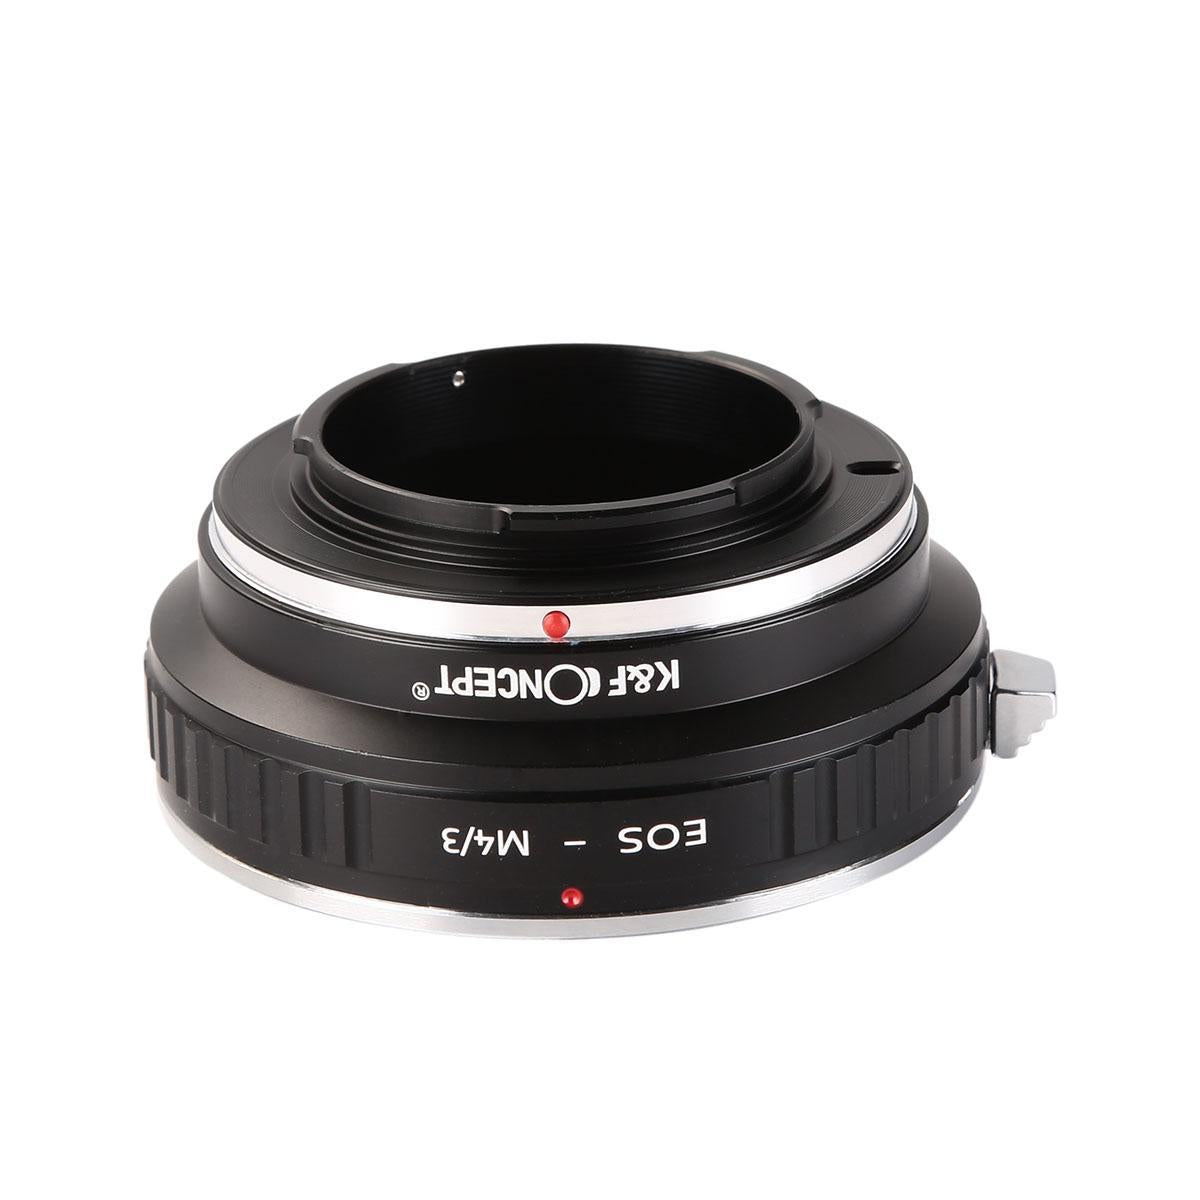 K&F Concept EOS-M4/3 High Precision Lens Adapter Mount for Canon EOS EF EF-S Lens to M4/3 Micro Four Thirds MFT Mount Camera Body